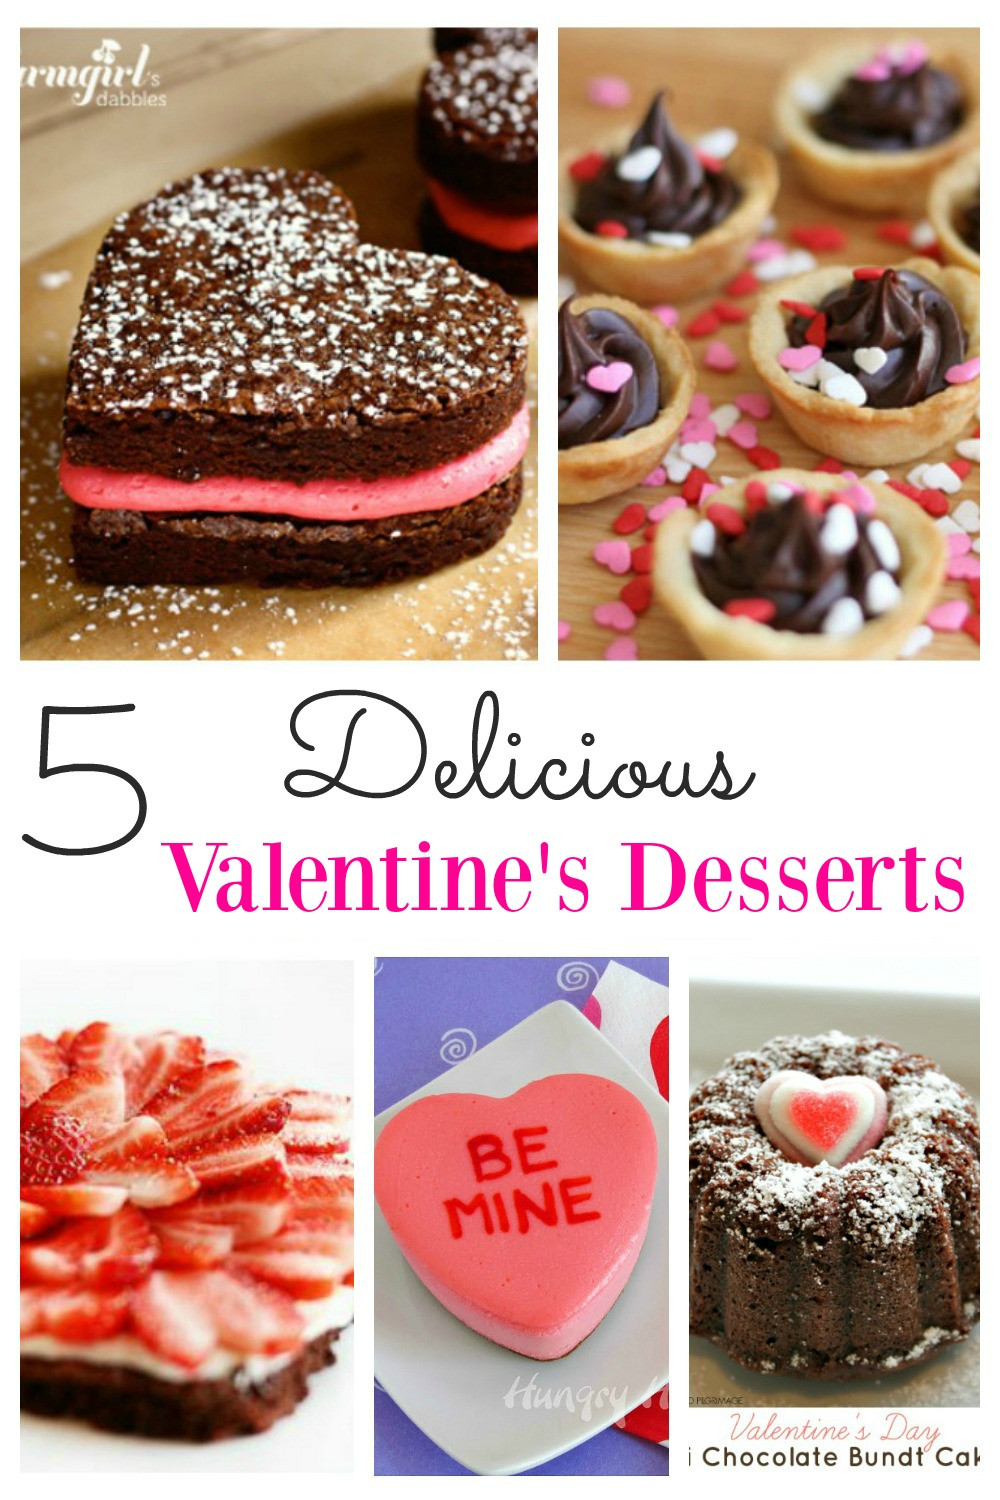 Valentine Desserts Recipes
 Delicious Valentines Desserts